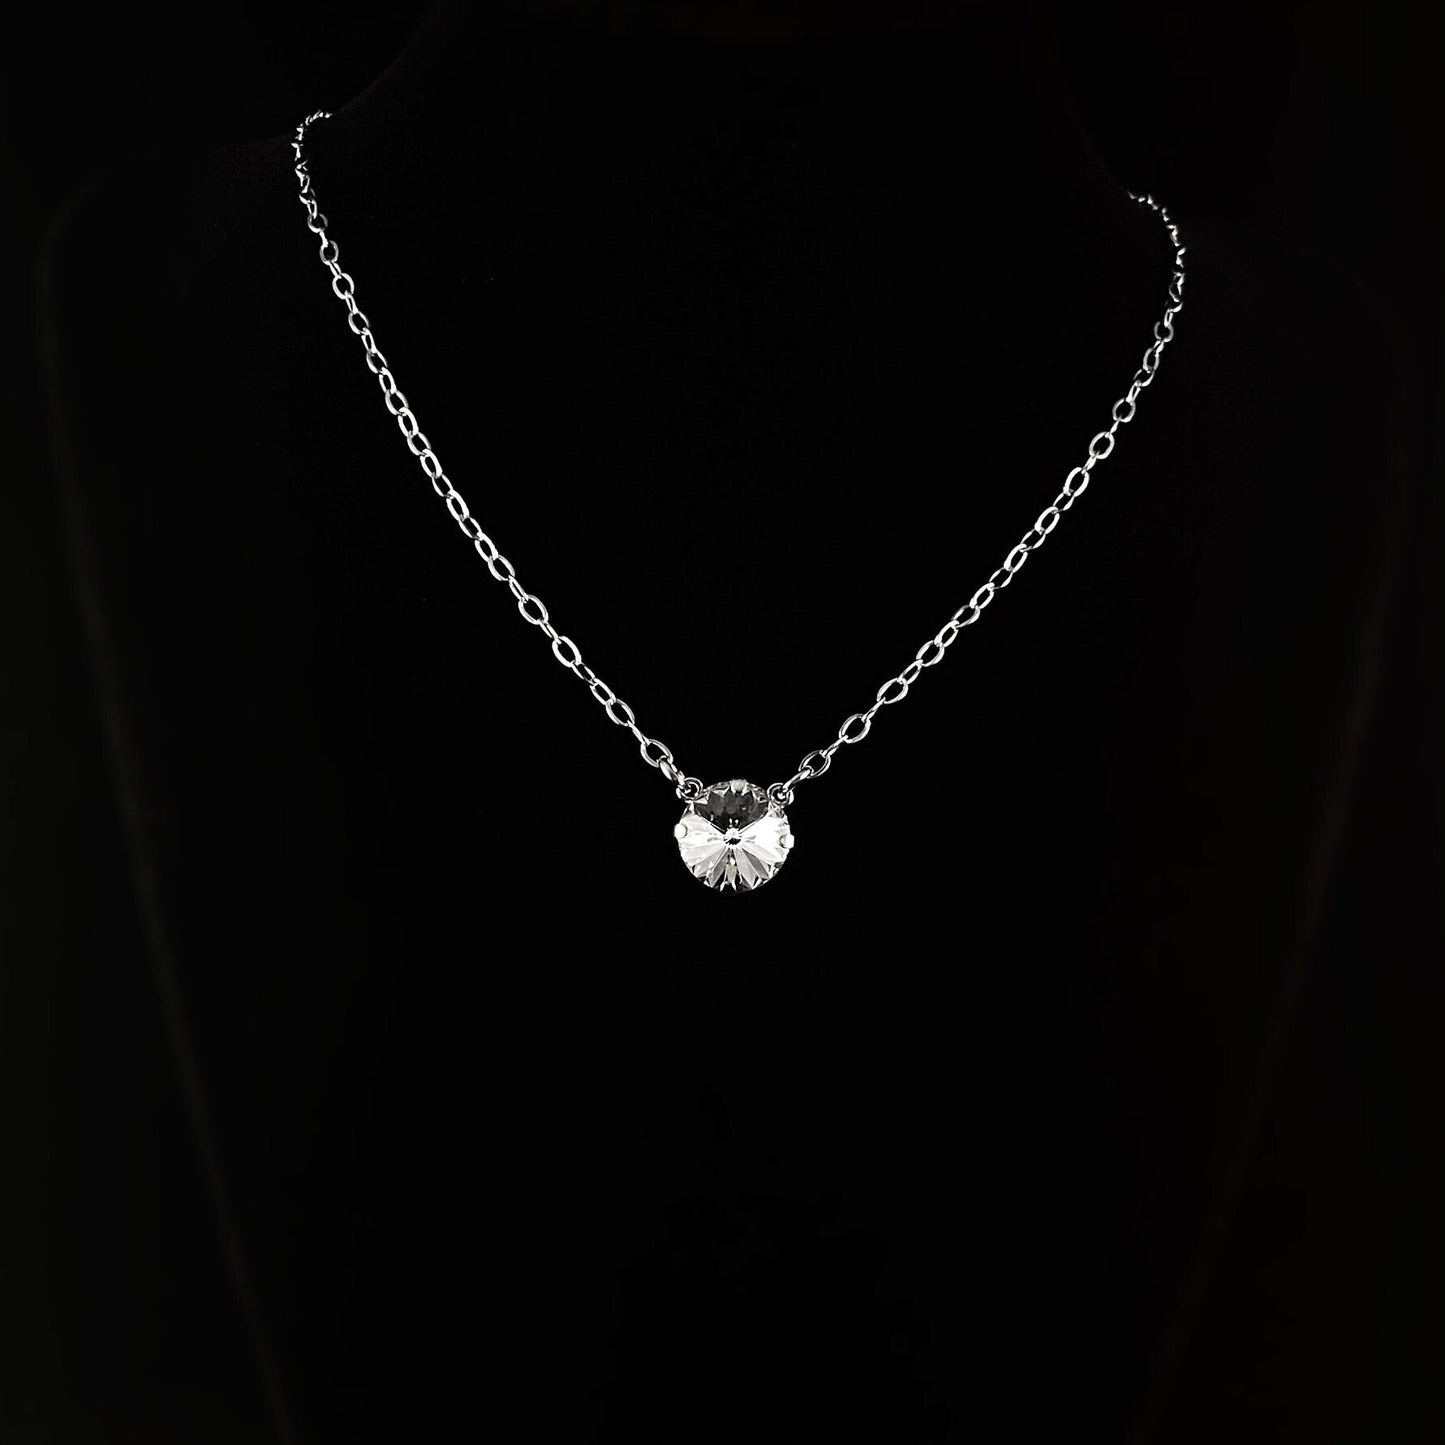 Clear Sparkle Swarovski Crystal Silver Chain Necklace - VBC